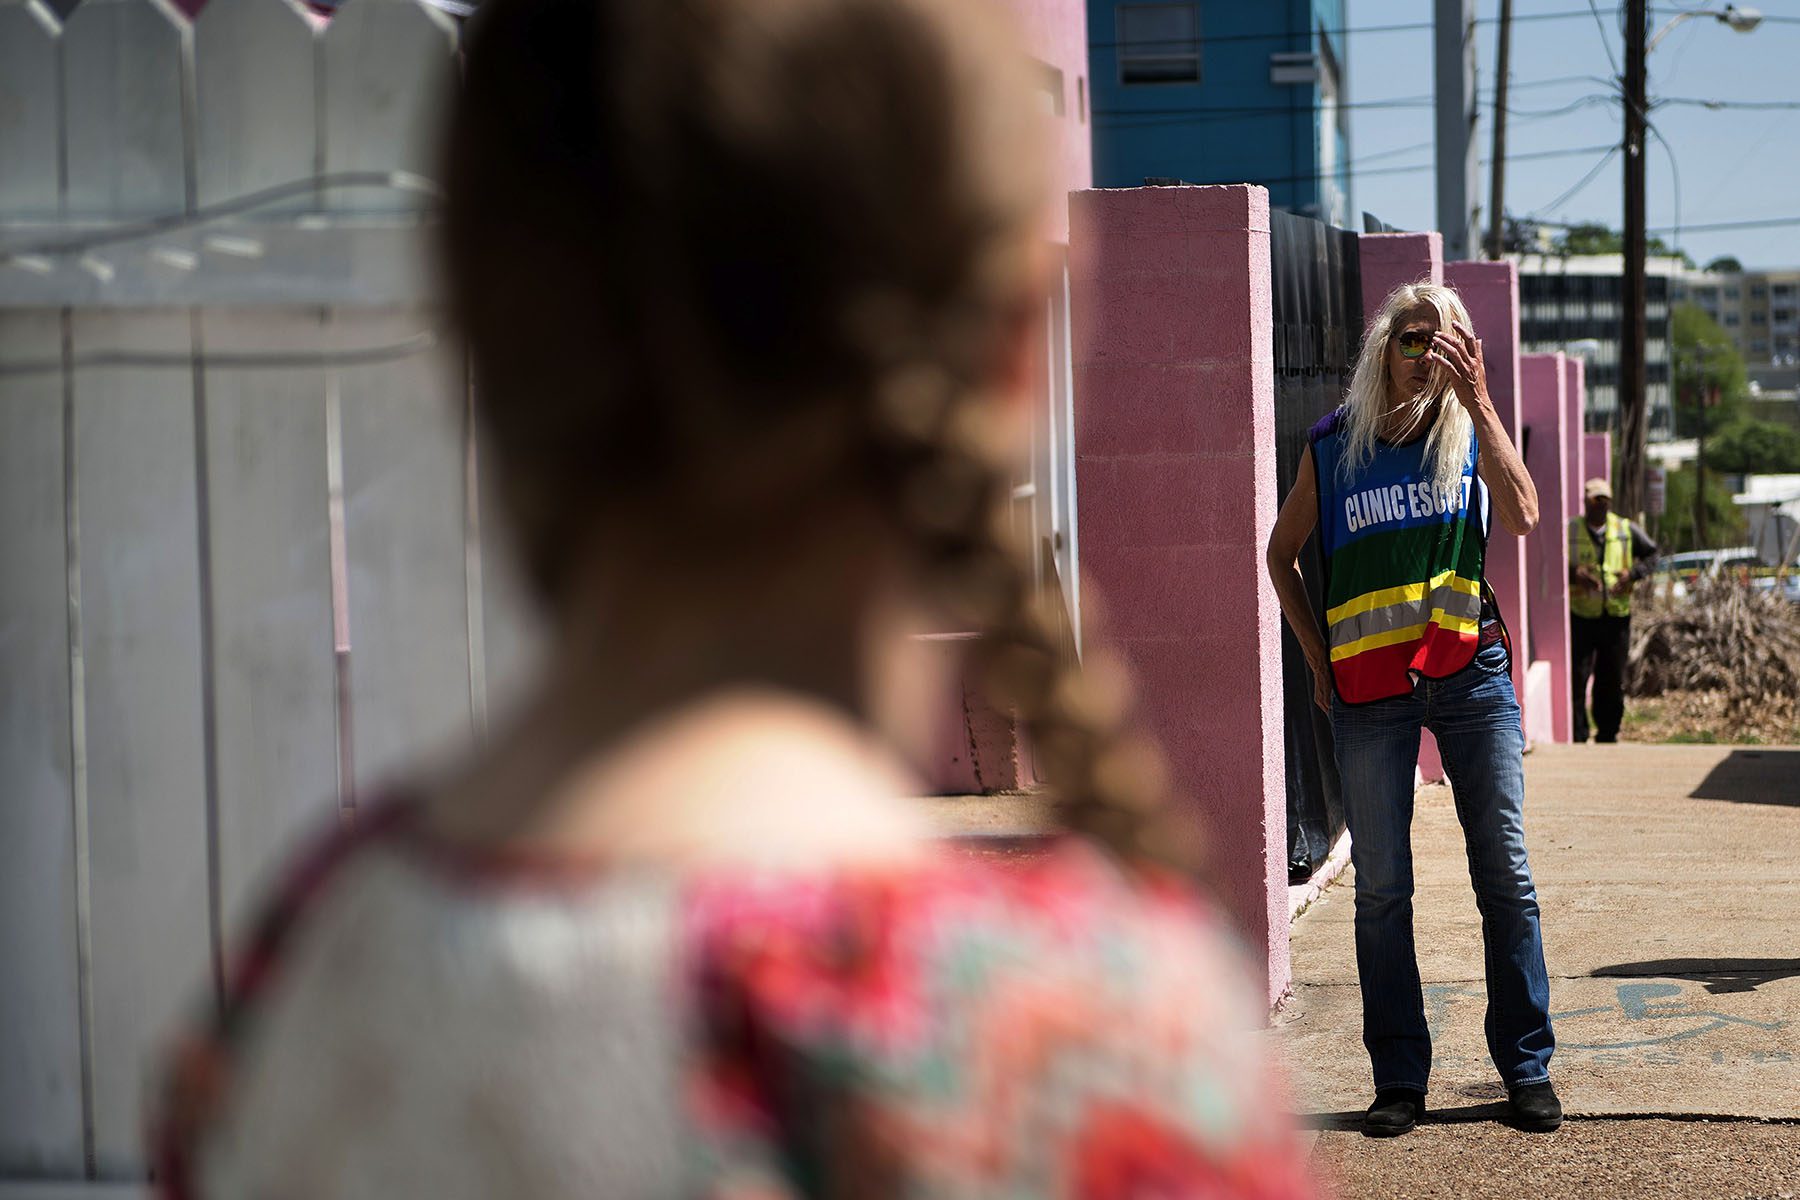 An anti-abortion activist looks towards a volunteer clinic escort.